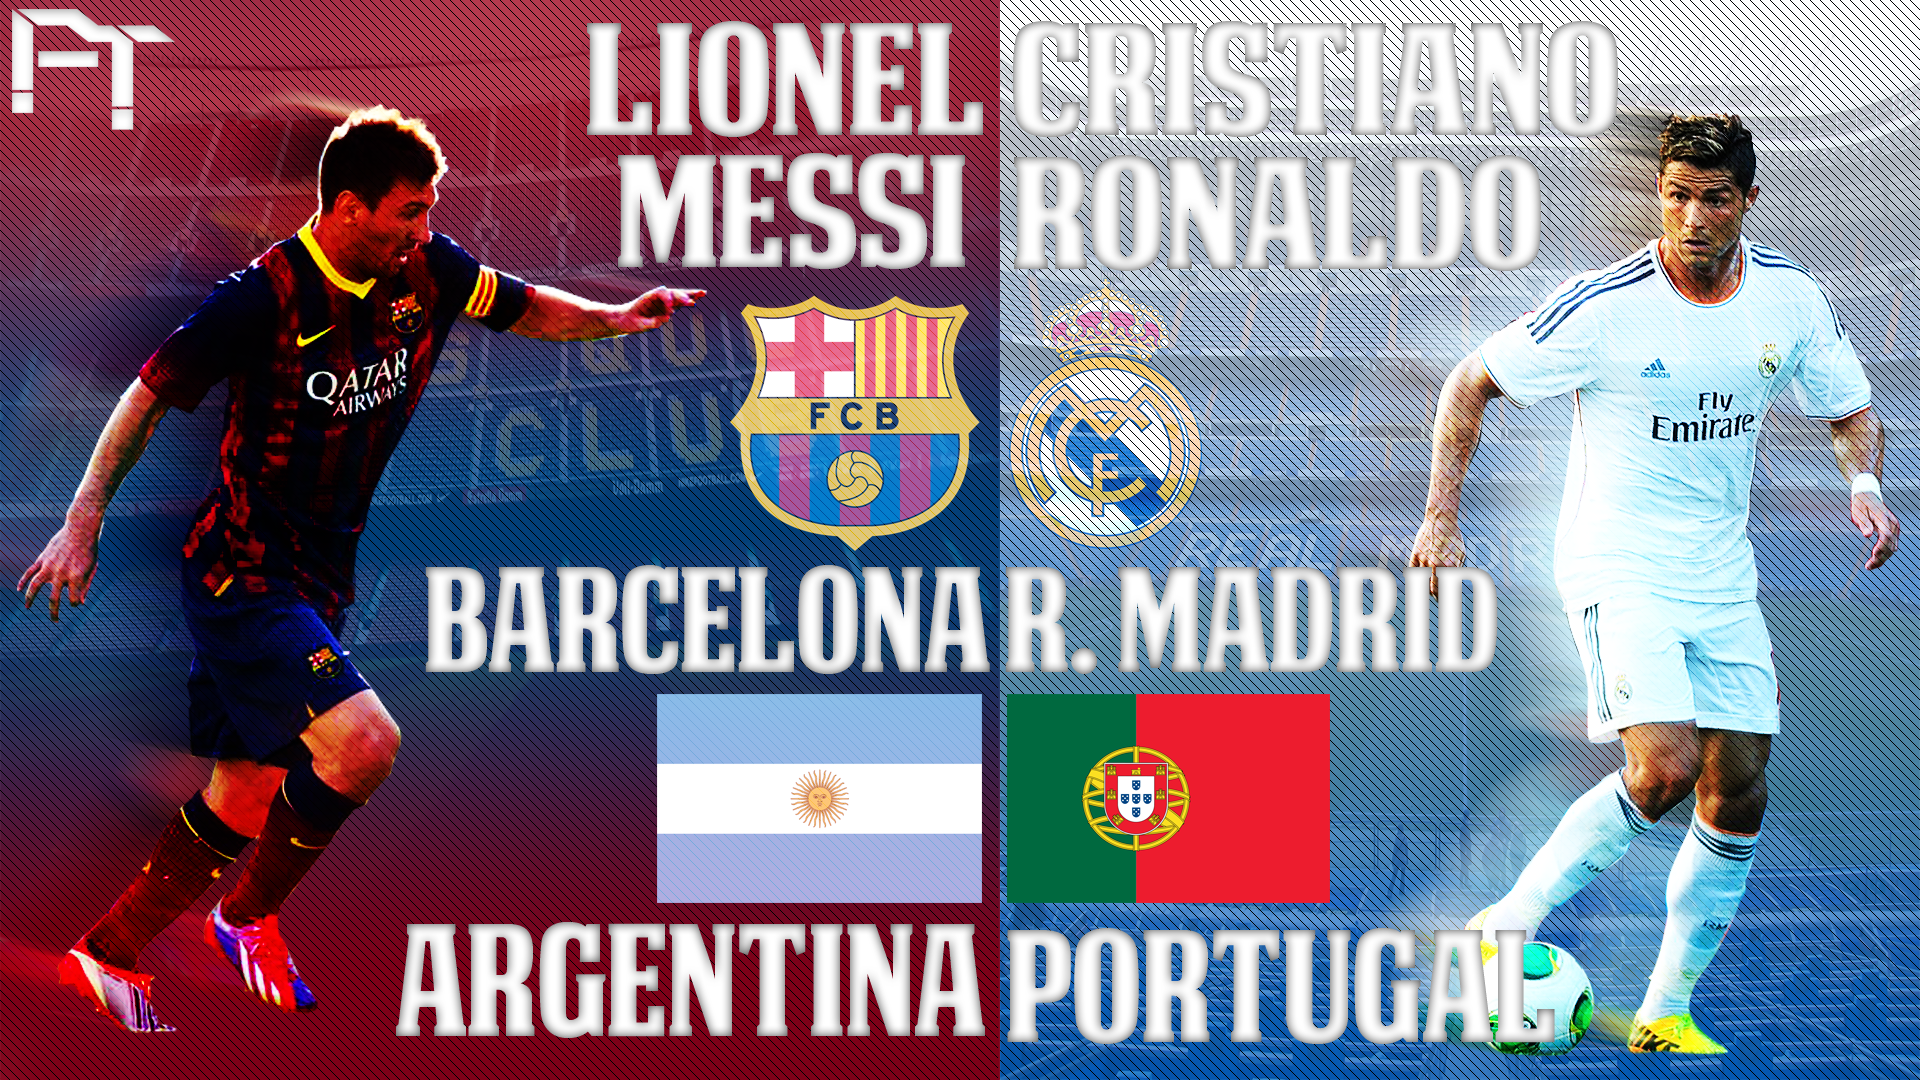 Messi Ronaldo Neymar Wallpaper - Ronaldo And Messi Wallpaper Soccer Players - HD Wallpaper 